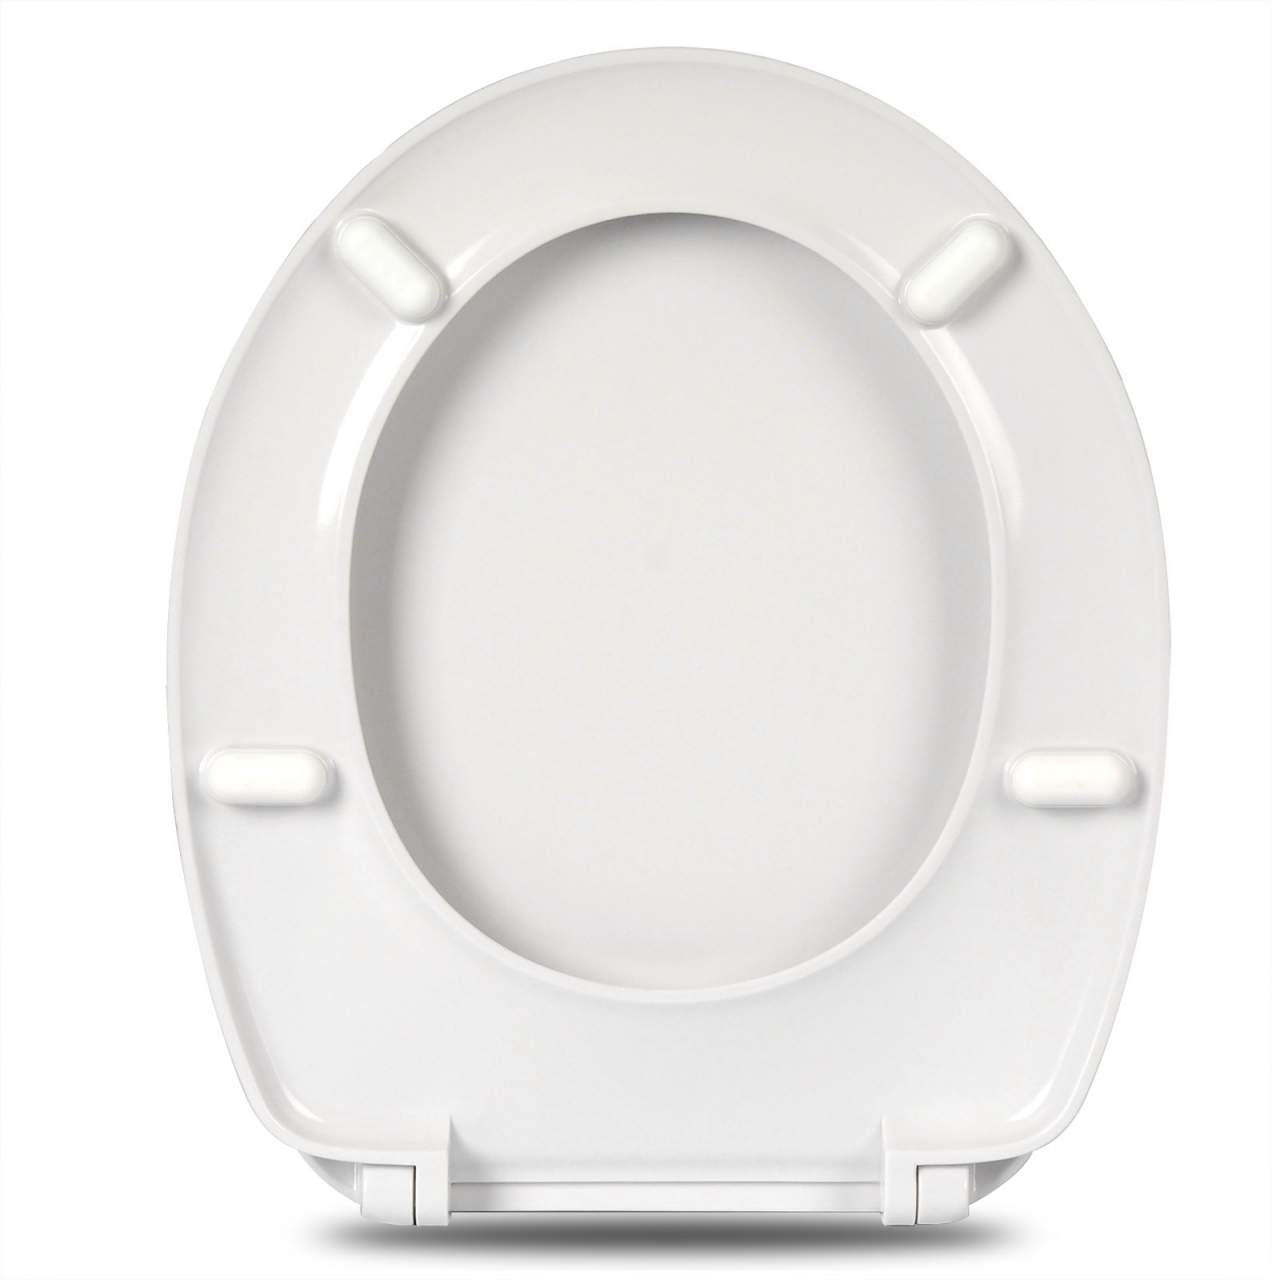 Bisagra Universal para asiento WC plástico blanco